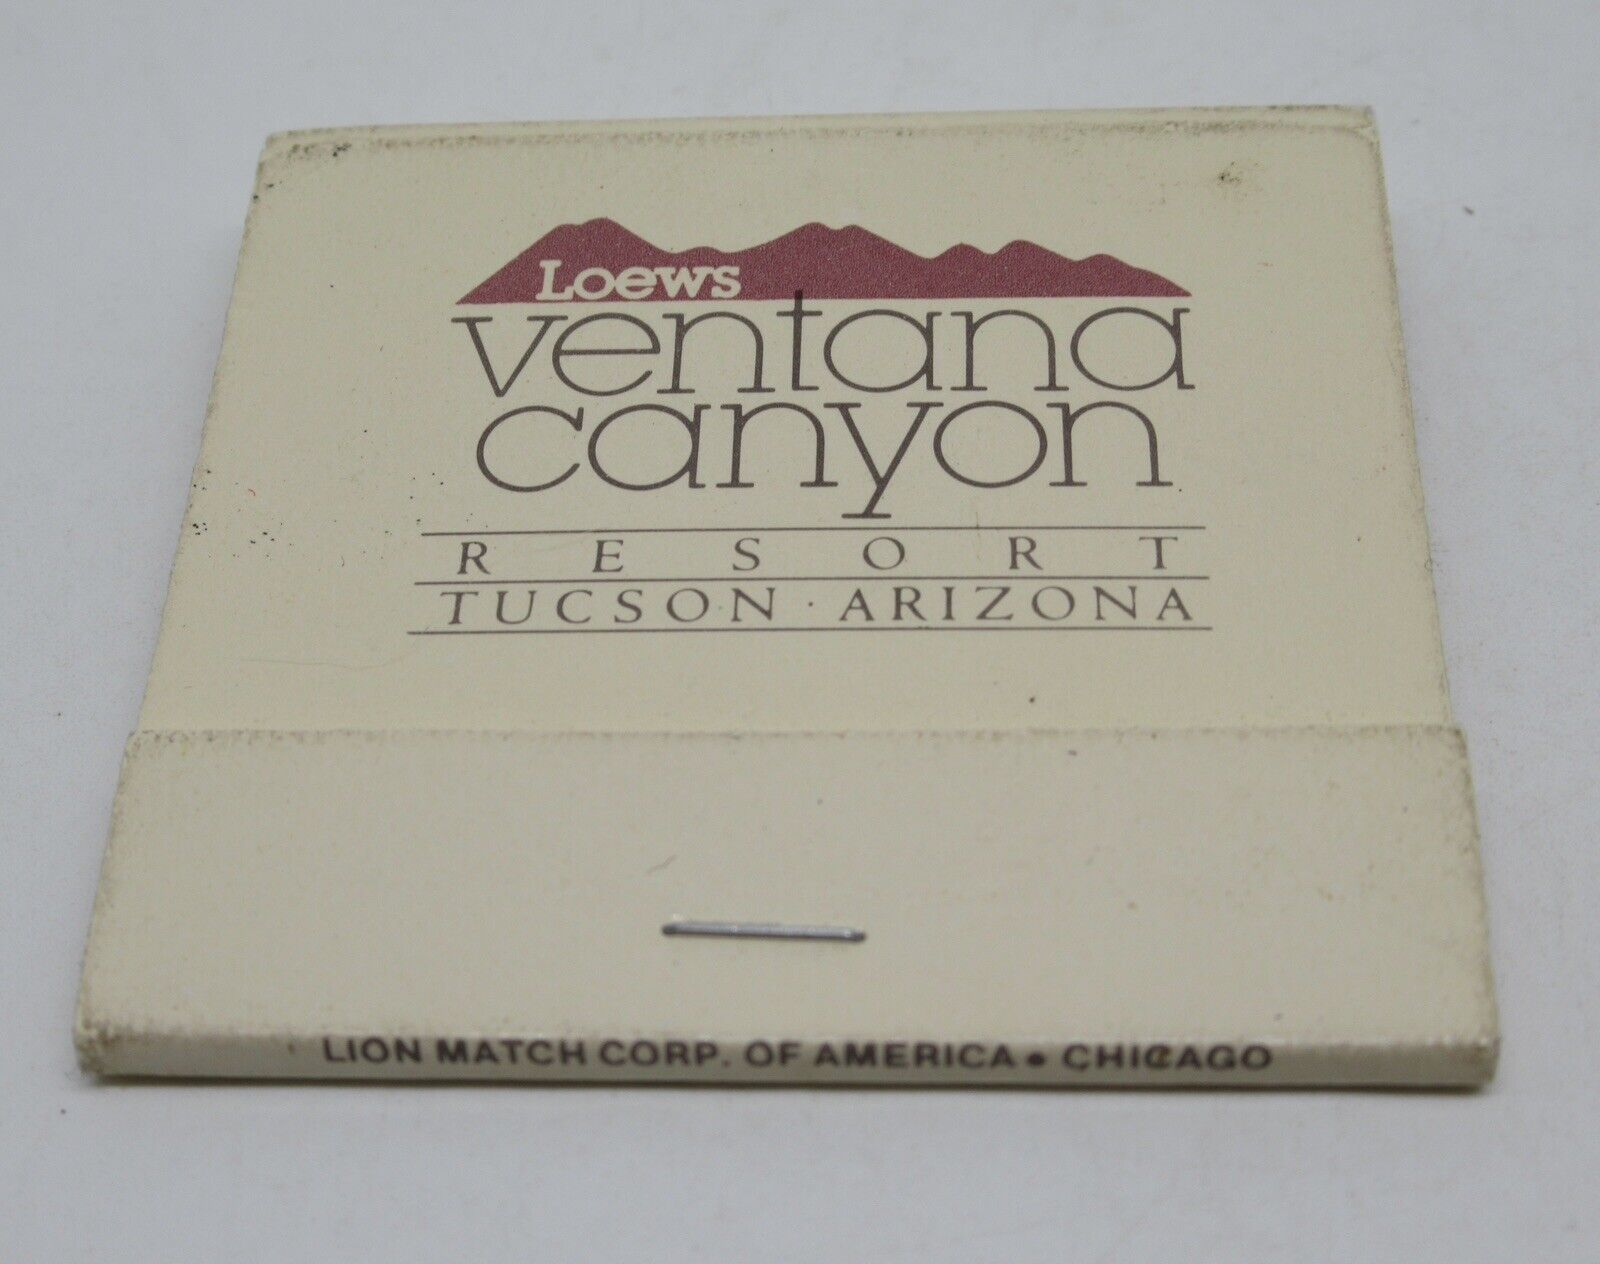 Loews Ventana Canyon Resort Tucson Arizona FULL Matchbook